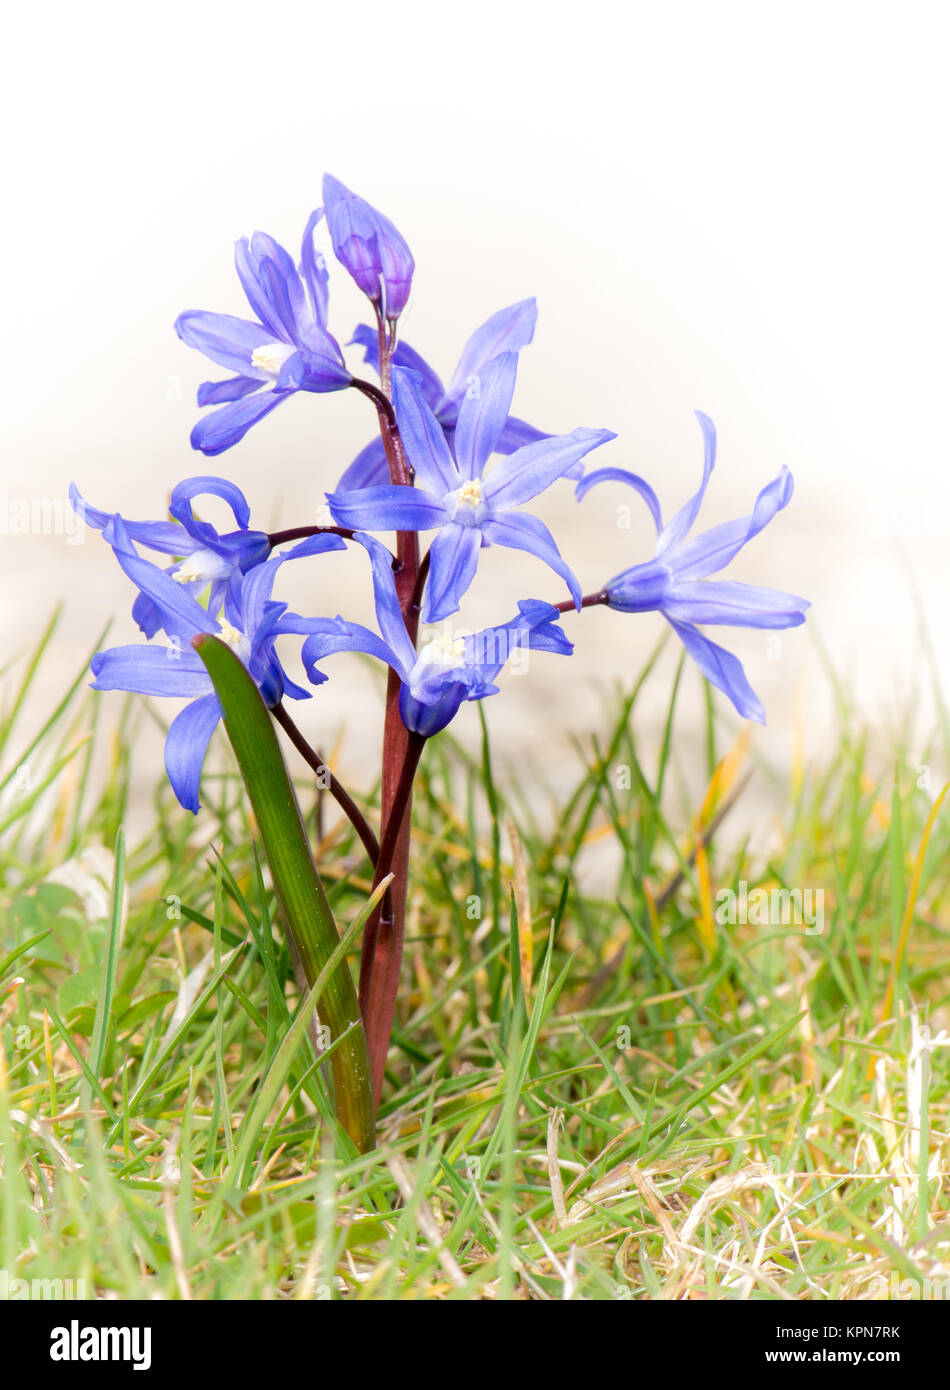 Blue Scilla flower in the grass Stock Photo